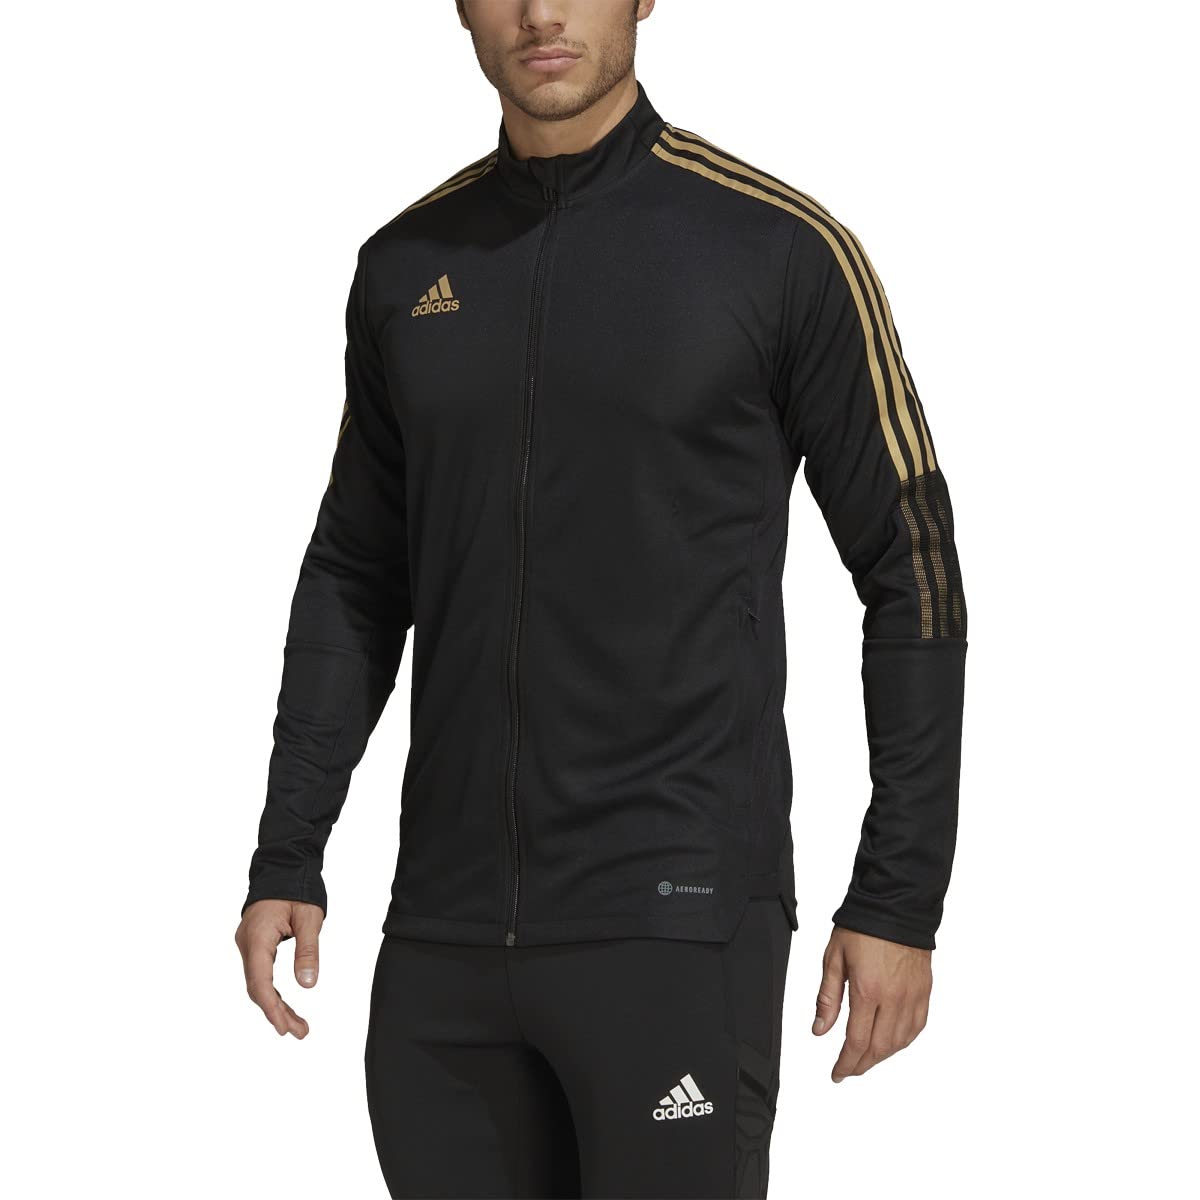 adidas Men's Tiro Track Jacket, Black/Gold, X-Large